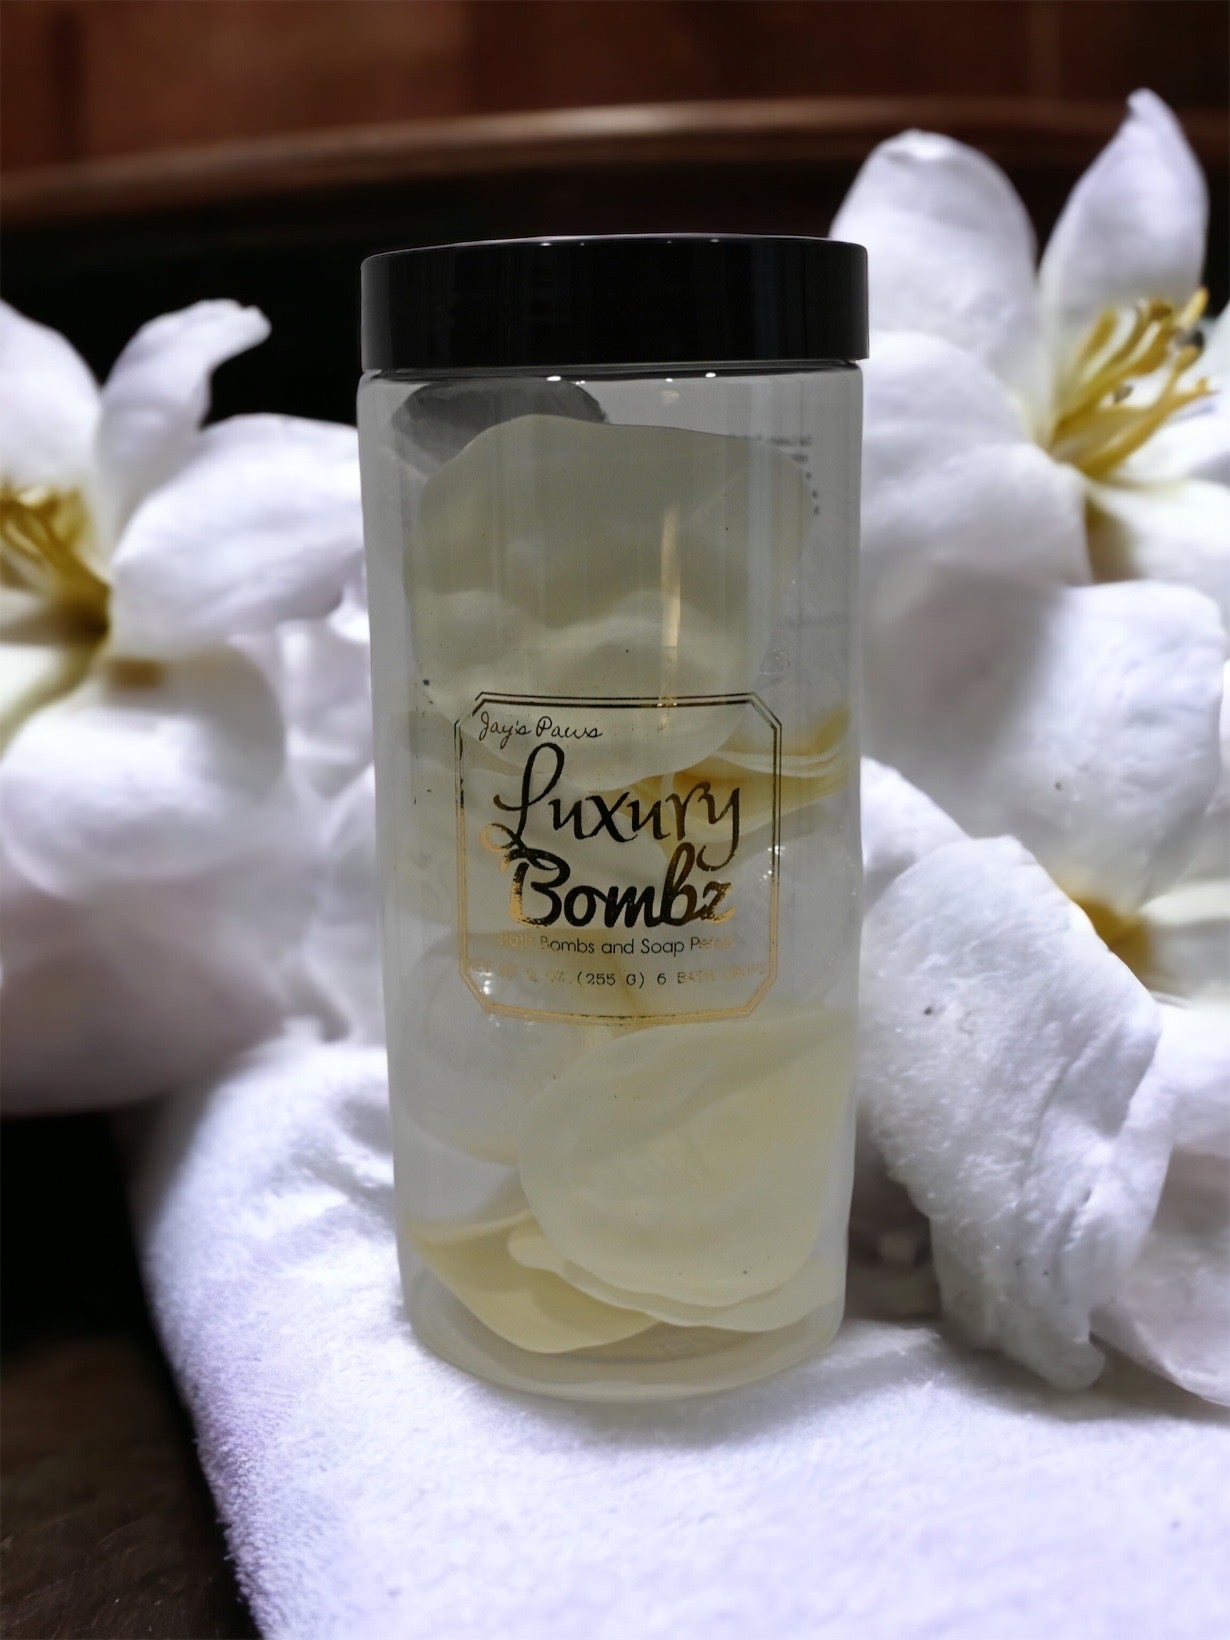 Jay’s Paws Luxury Bombz - Scented Bath Bombz & Soap Petals